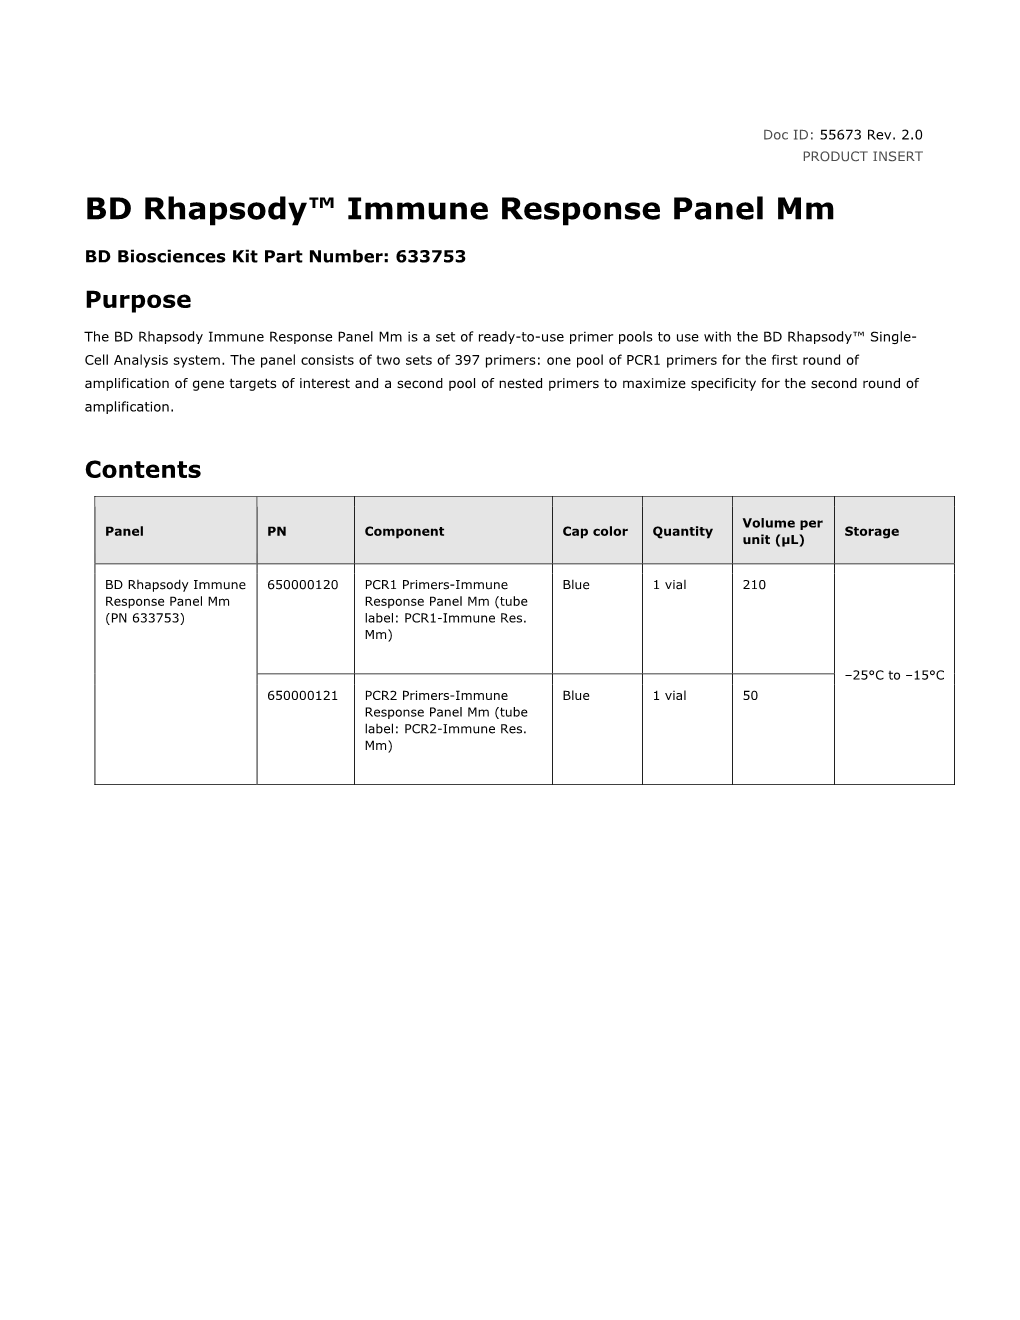 BD Rhapsody™ Immune Response Panel Mm